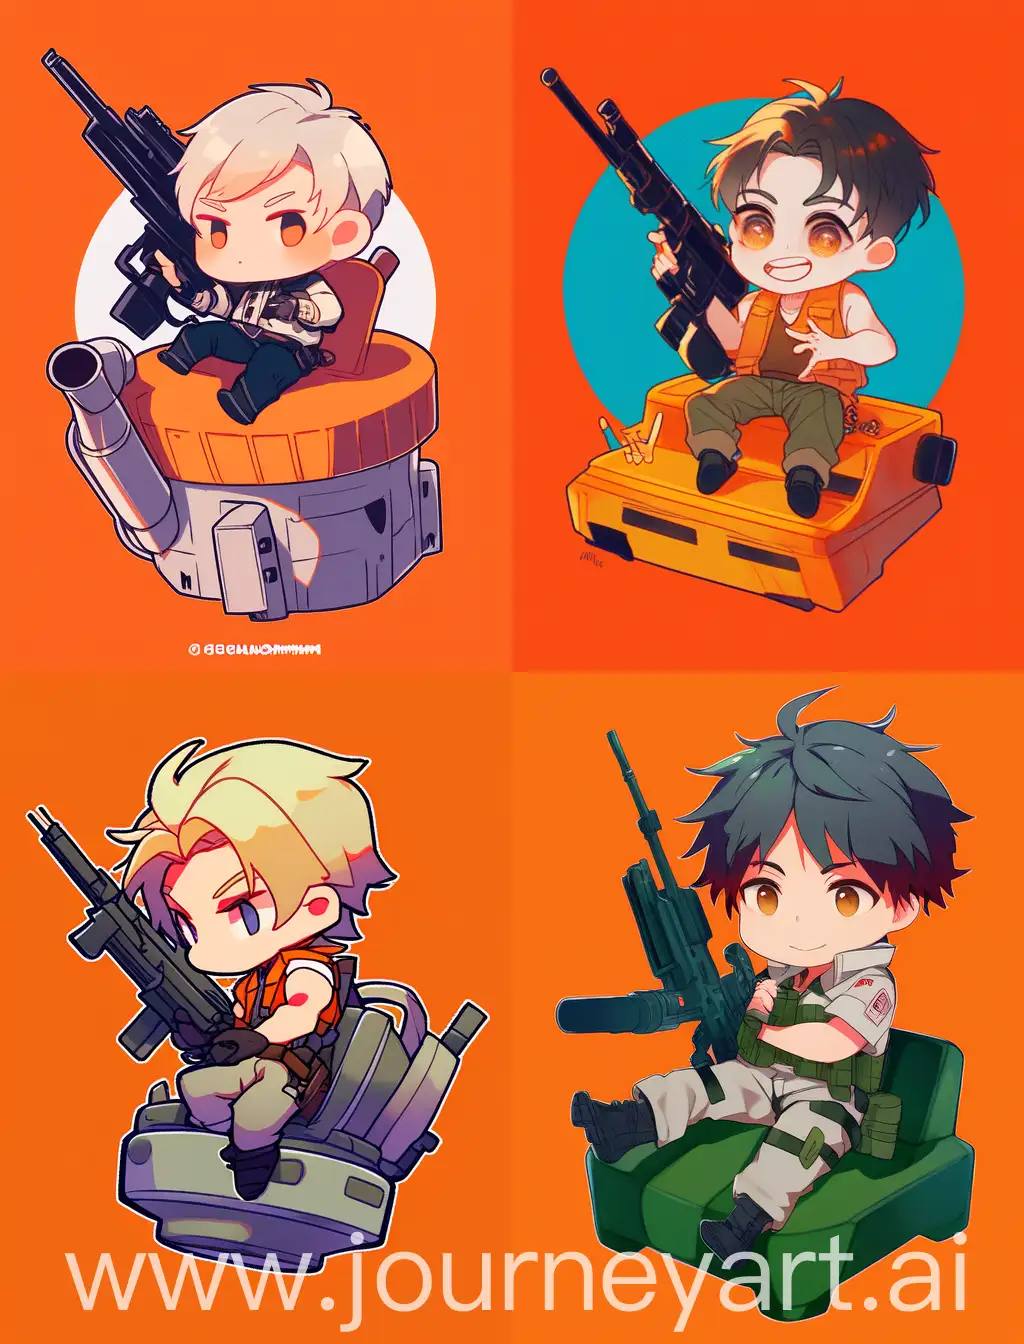 Chibi-Anime-Guy-with-Gun-atop-Tank-on-Orange-Background